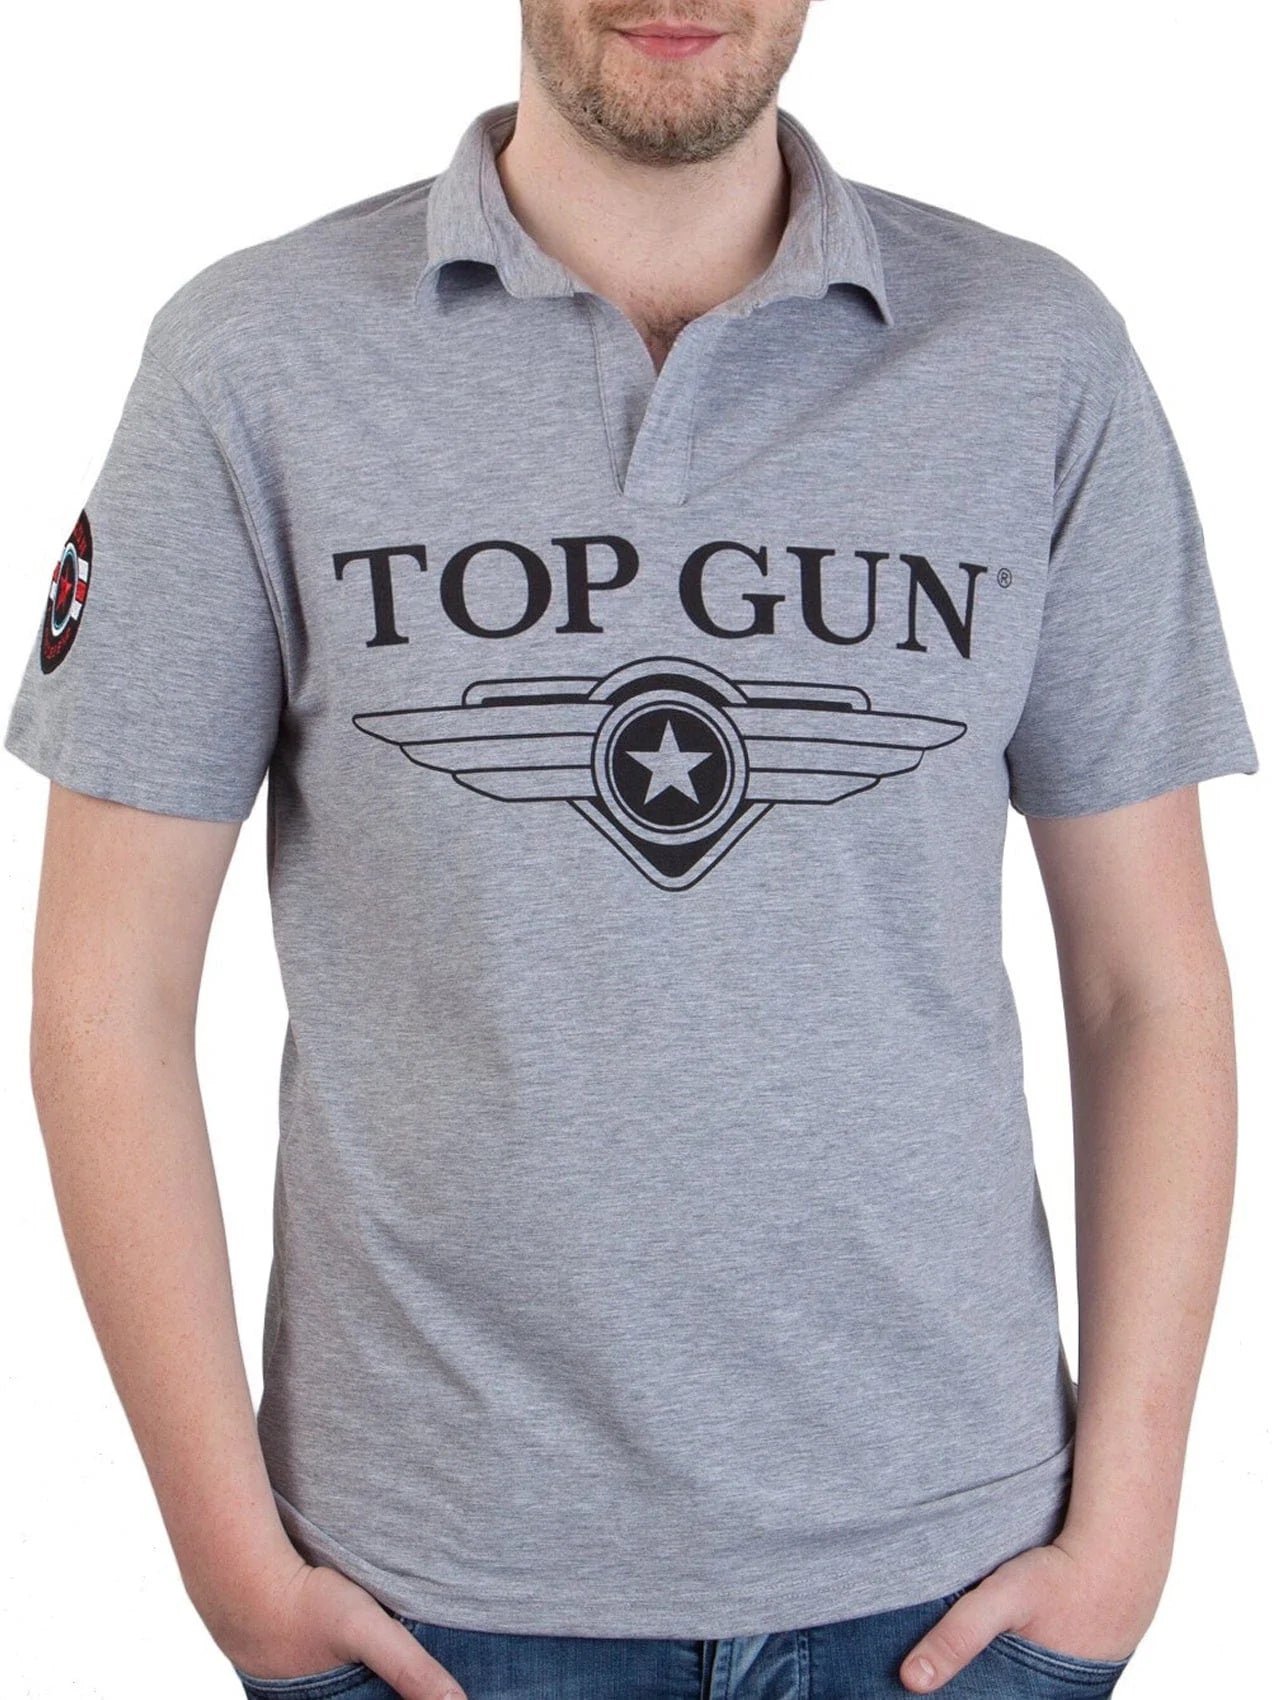 Top Gun "Moon" Poloshirt, lightgrey